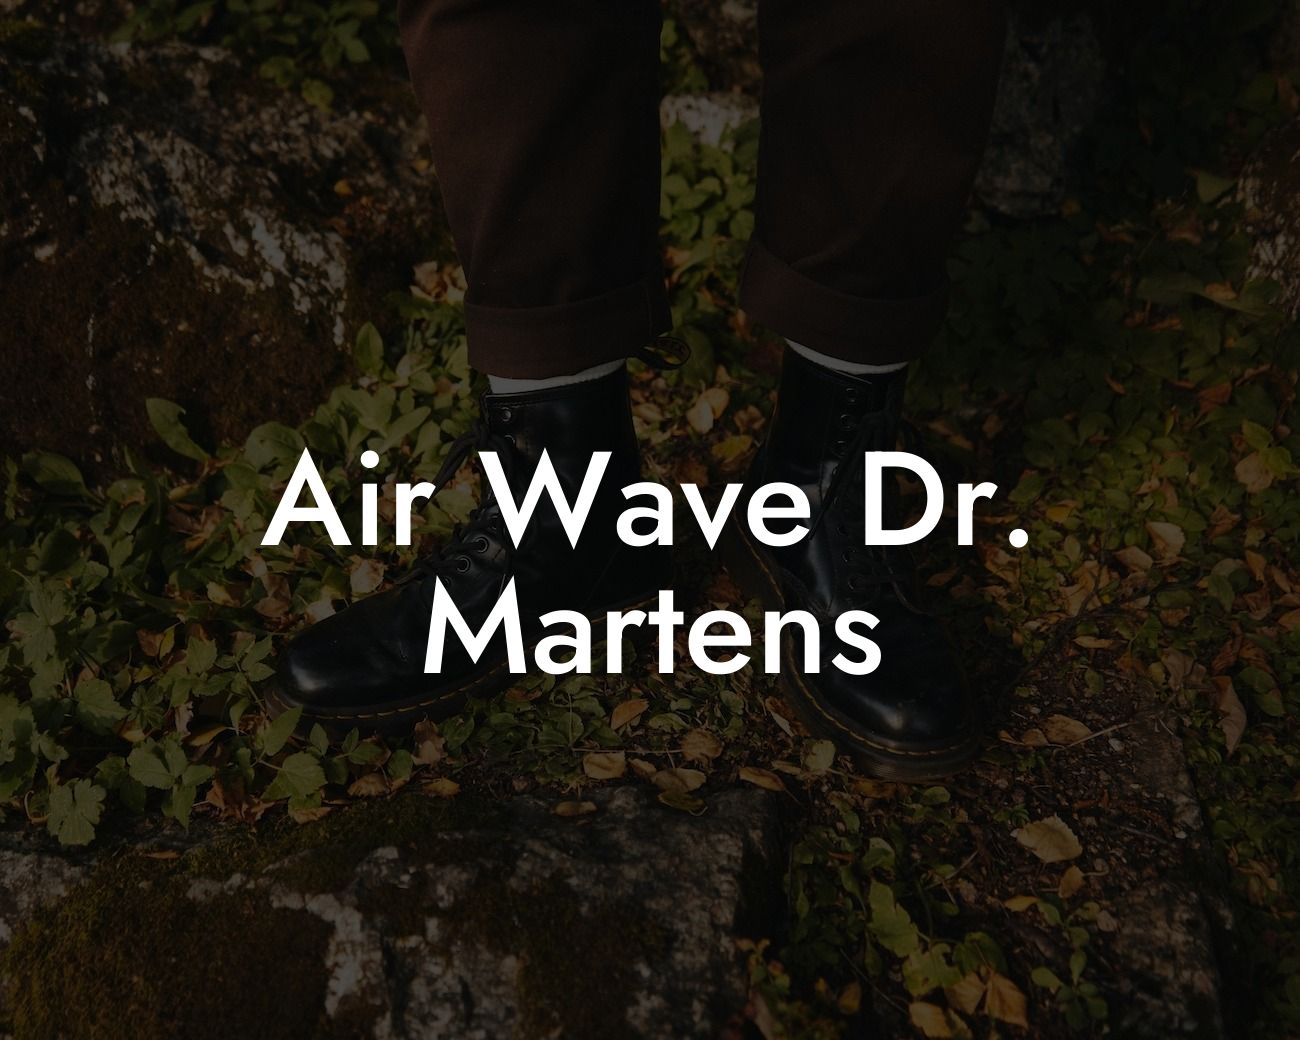 Air Wave Dr. Martens